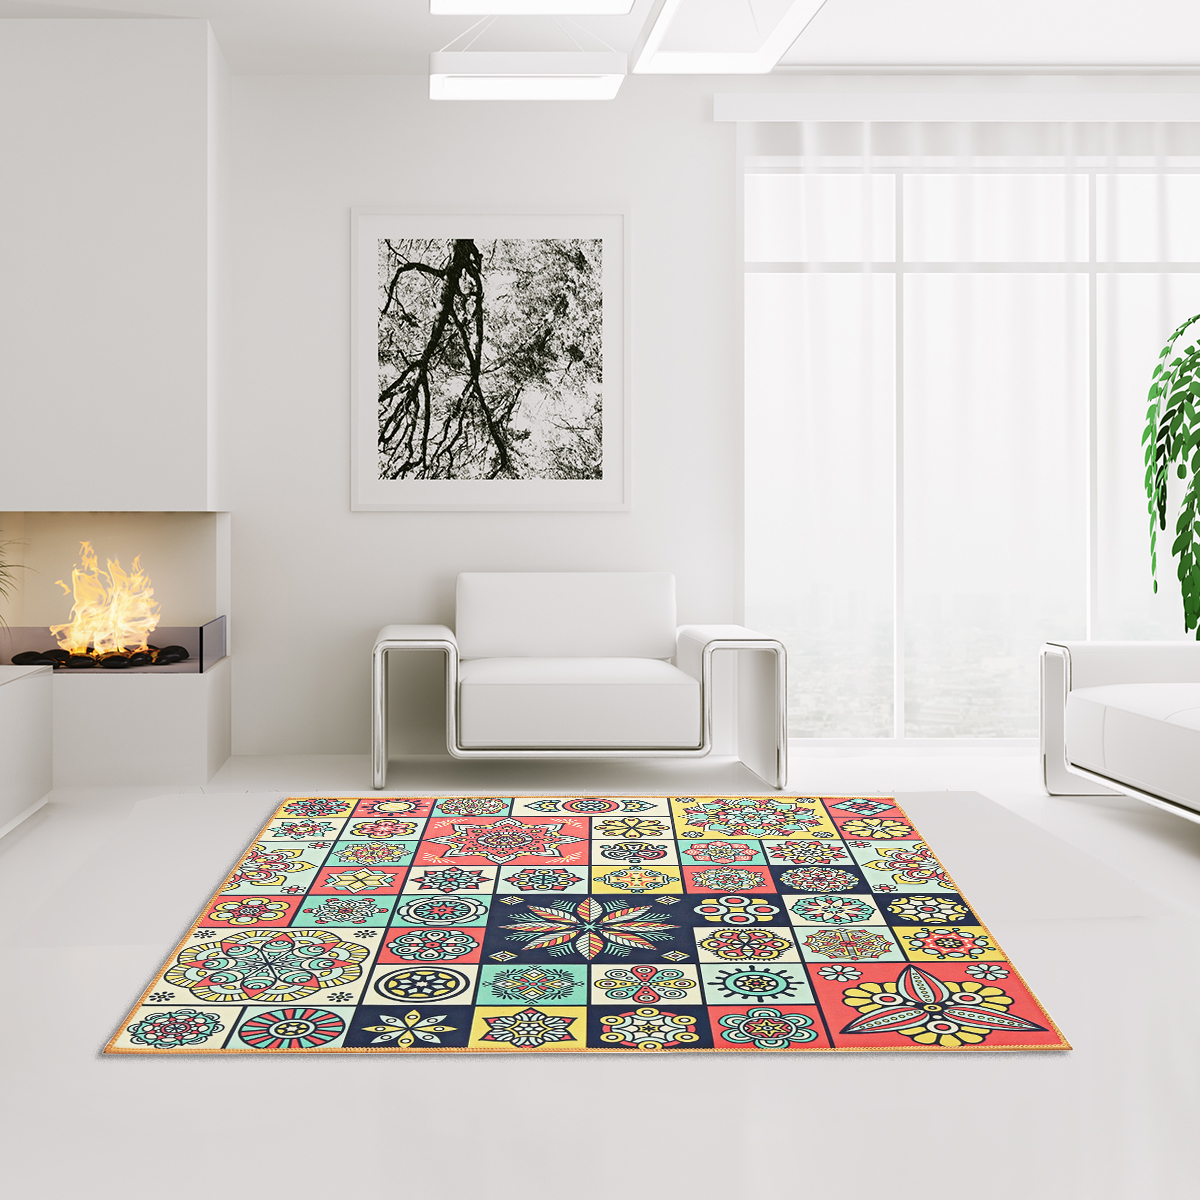 Polyester-Carpet-Rug-Bedside-Rug-Geometric-Floor-Mat-Living-Room-Bedroom-Carpet-for-Home-Decor-1835861-2